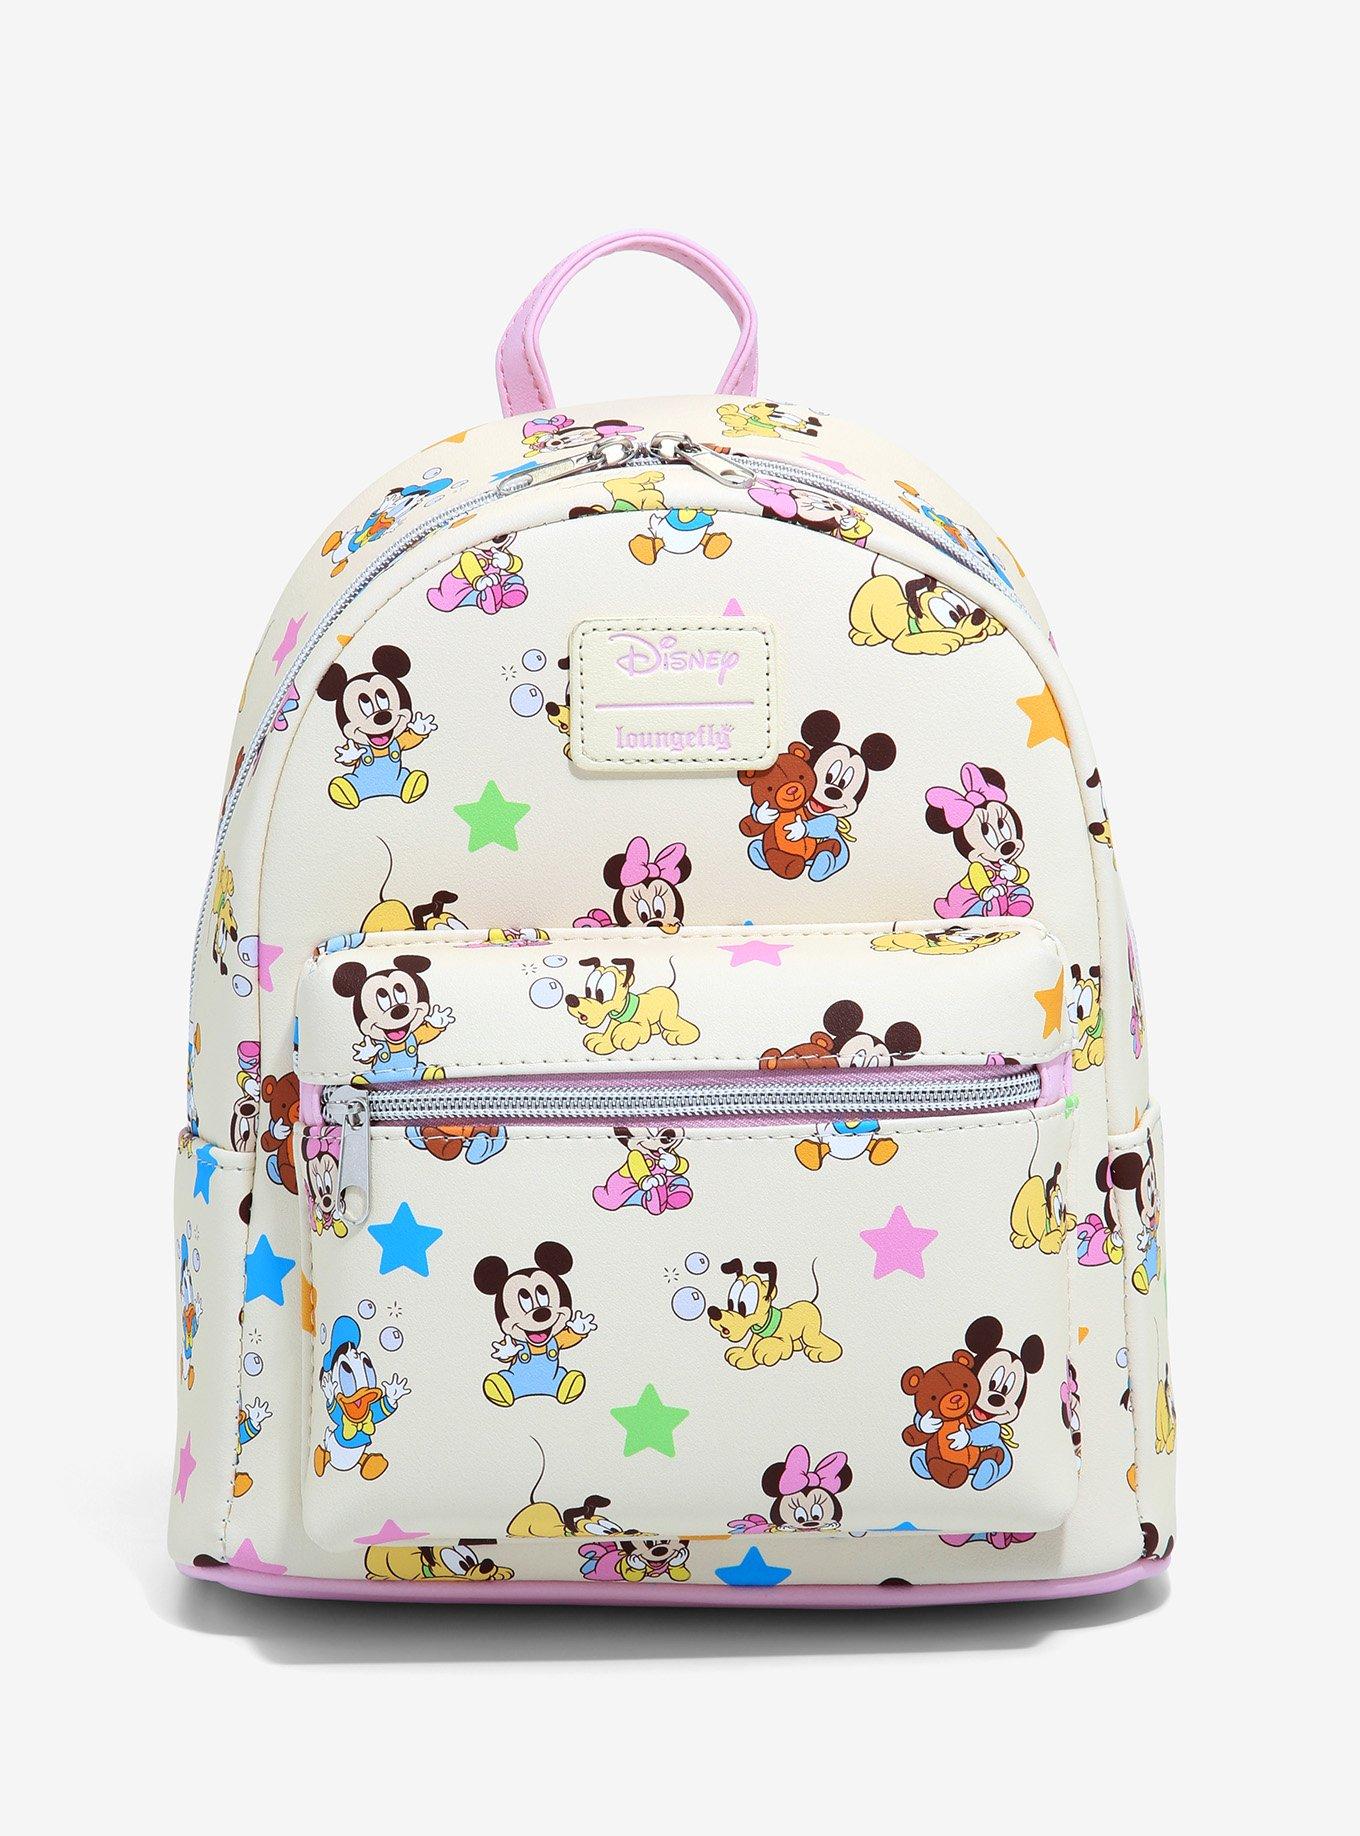 Disney Parks Loungefly Mini Backpack - Mickey and Friends Holiday Treats